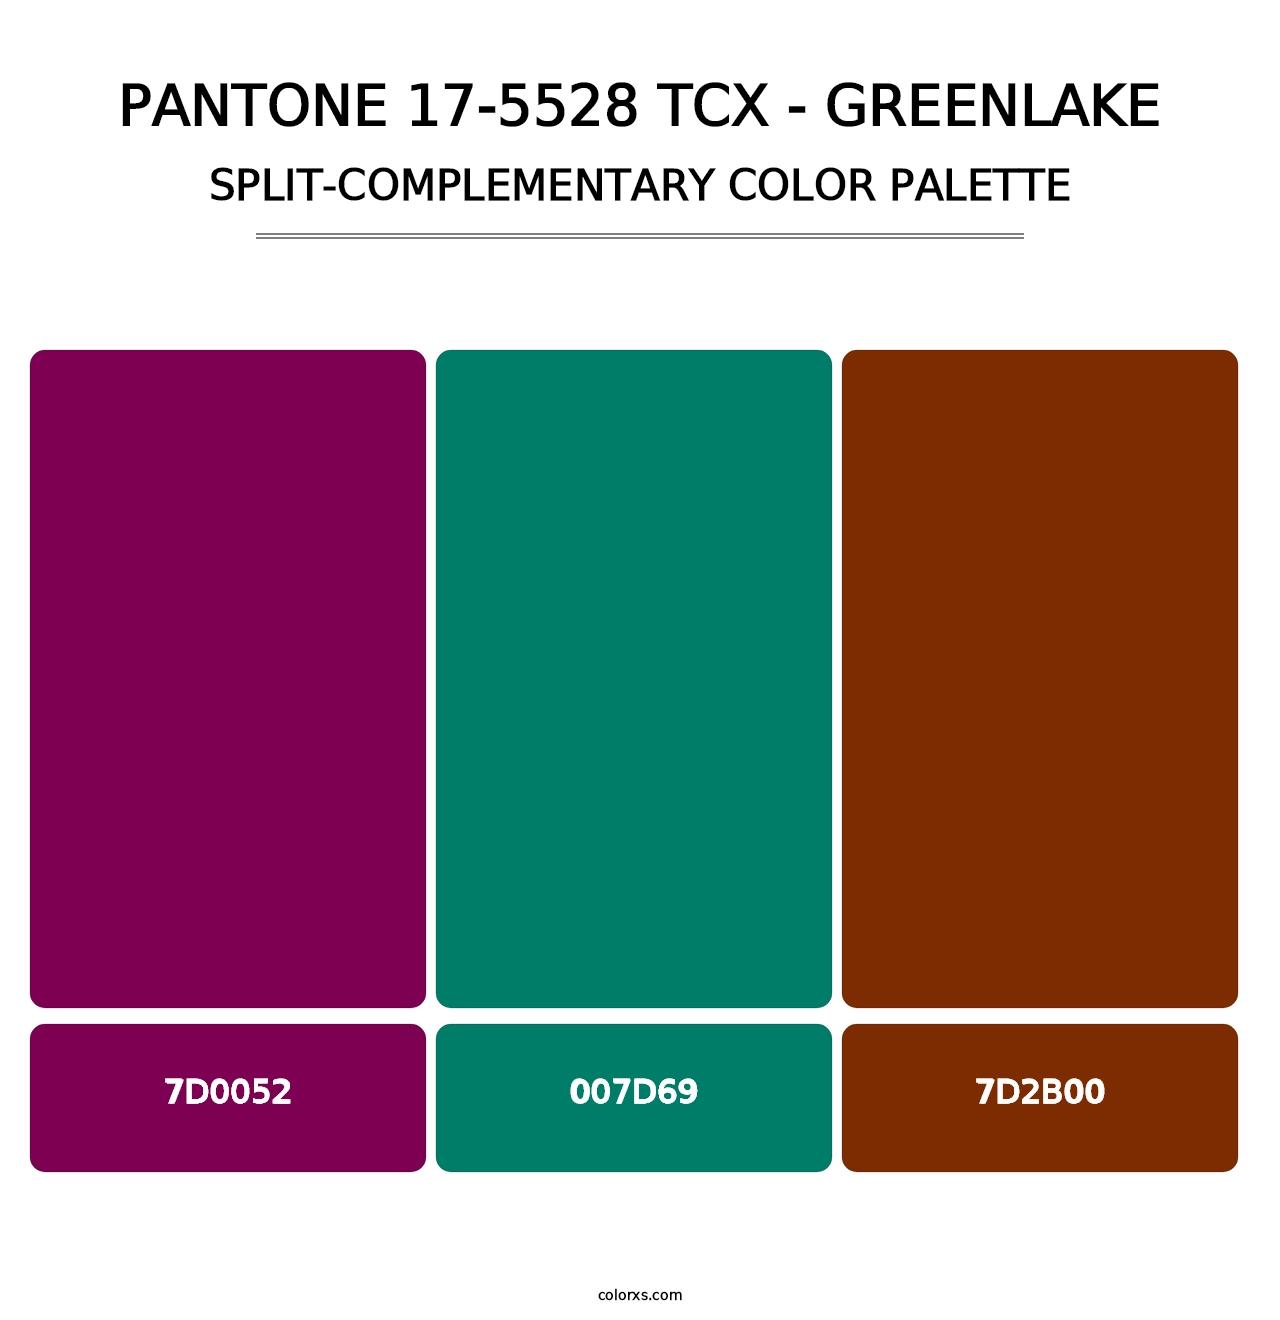 PANTONE 17-5528 TCX - Greenlake - Split-Complementary Color Palette